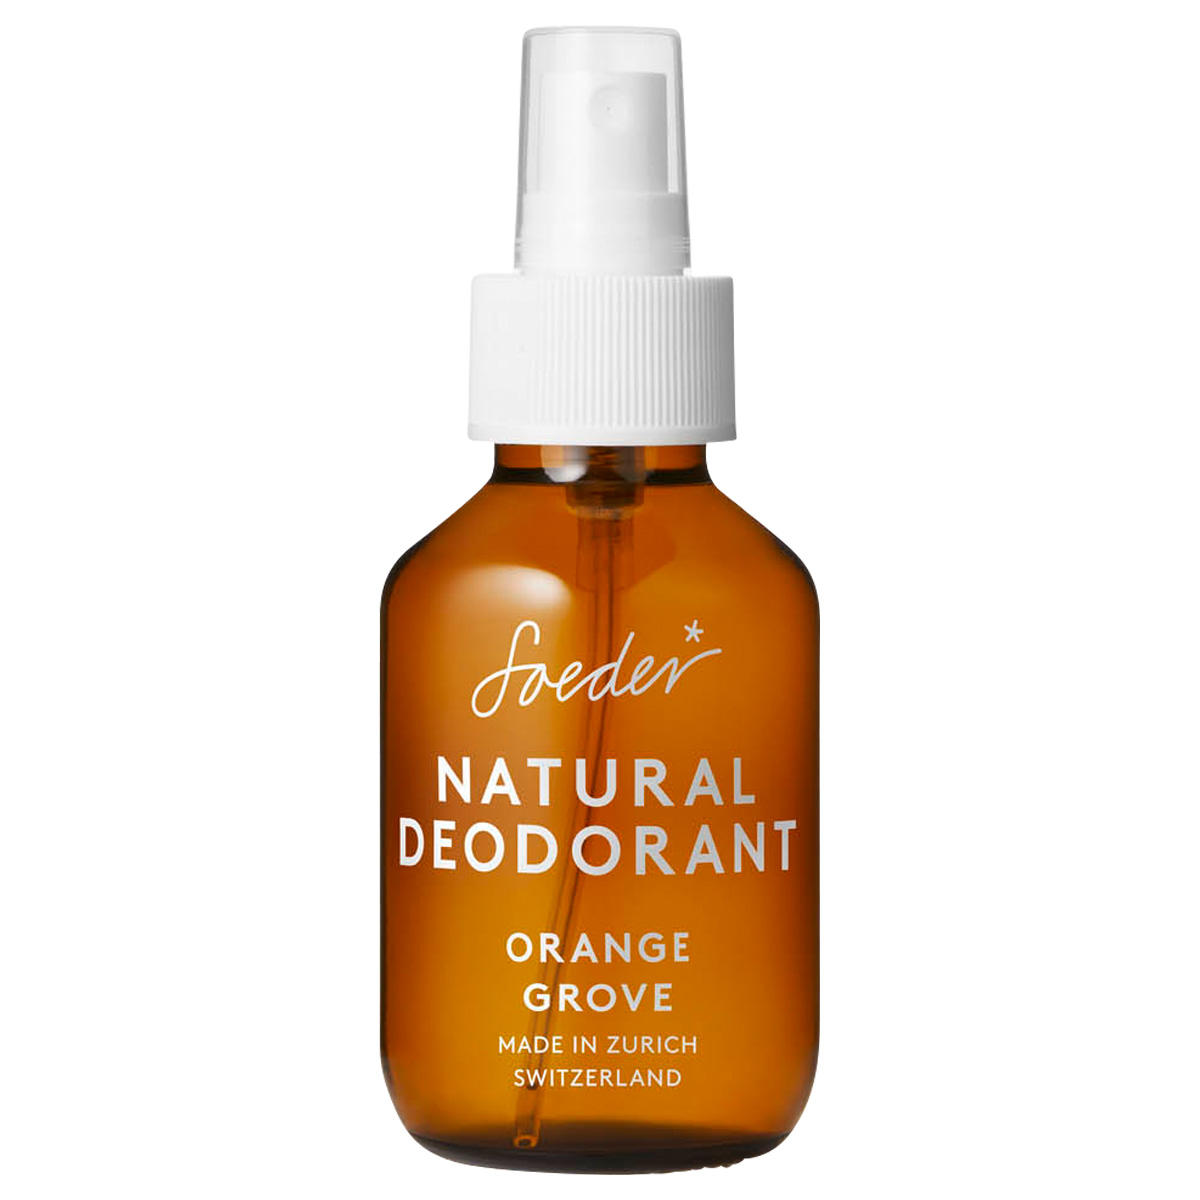 Soeder Natural Deodorant Orange Grove 100 ml - 1